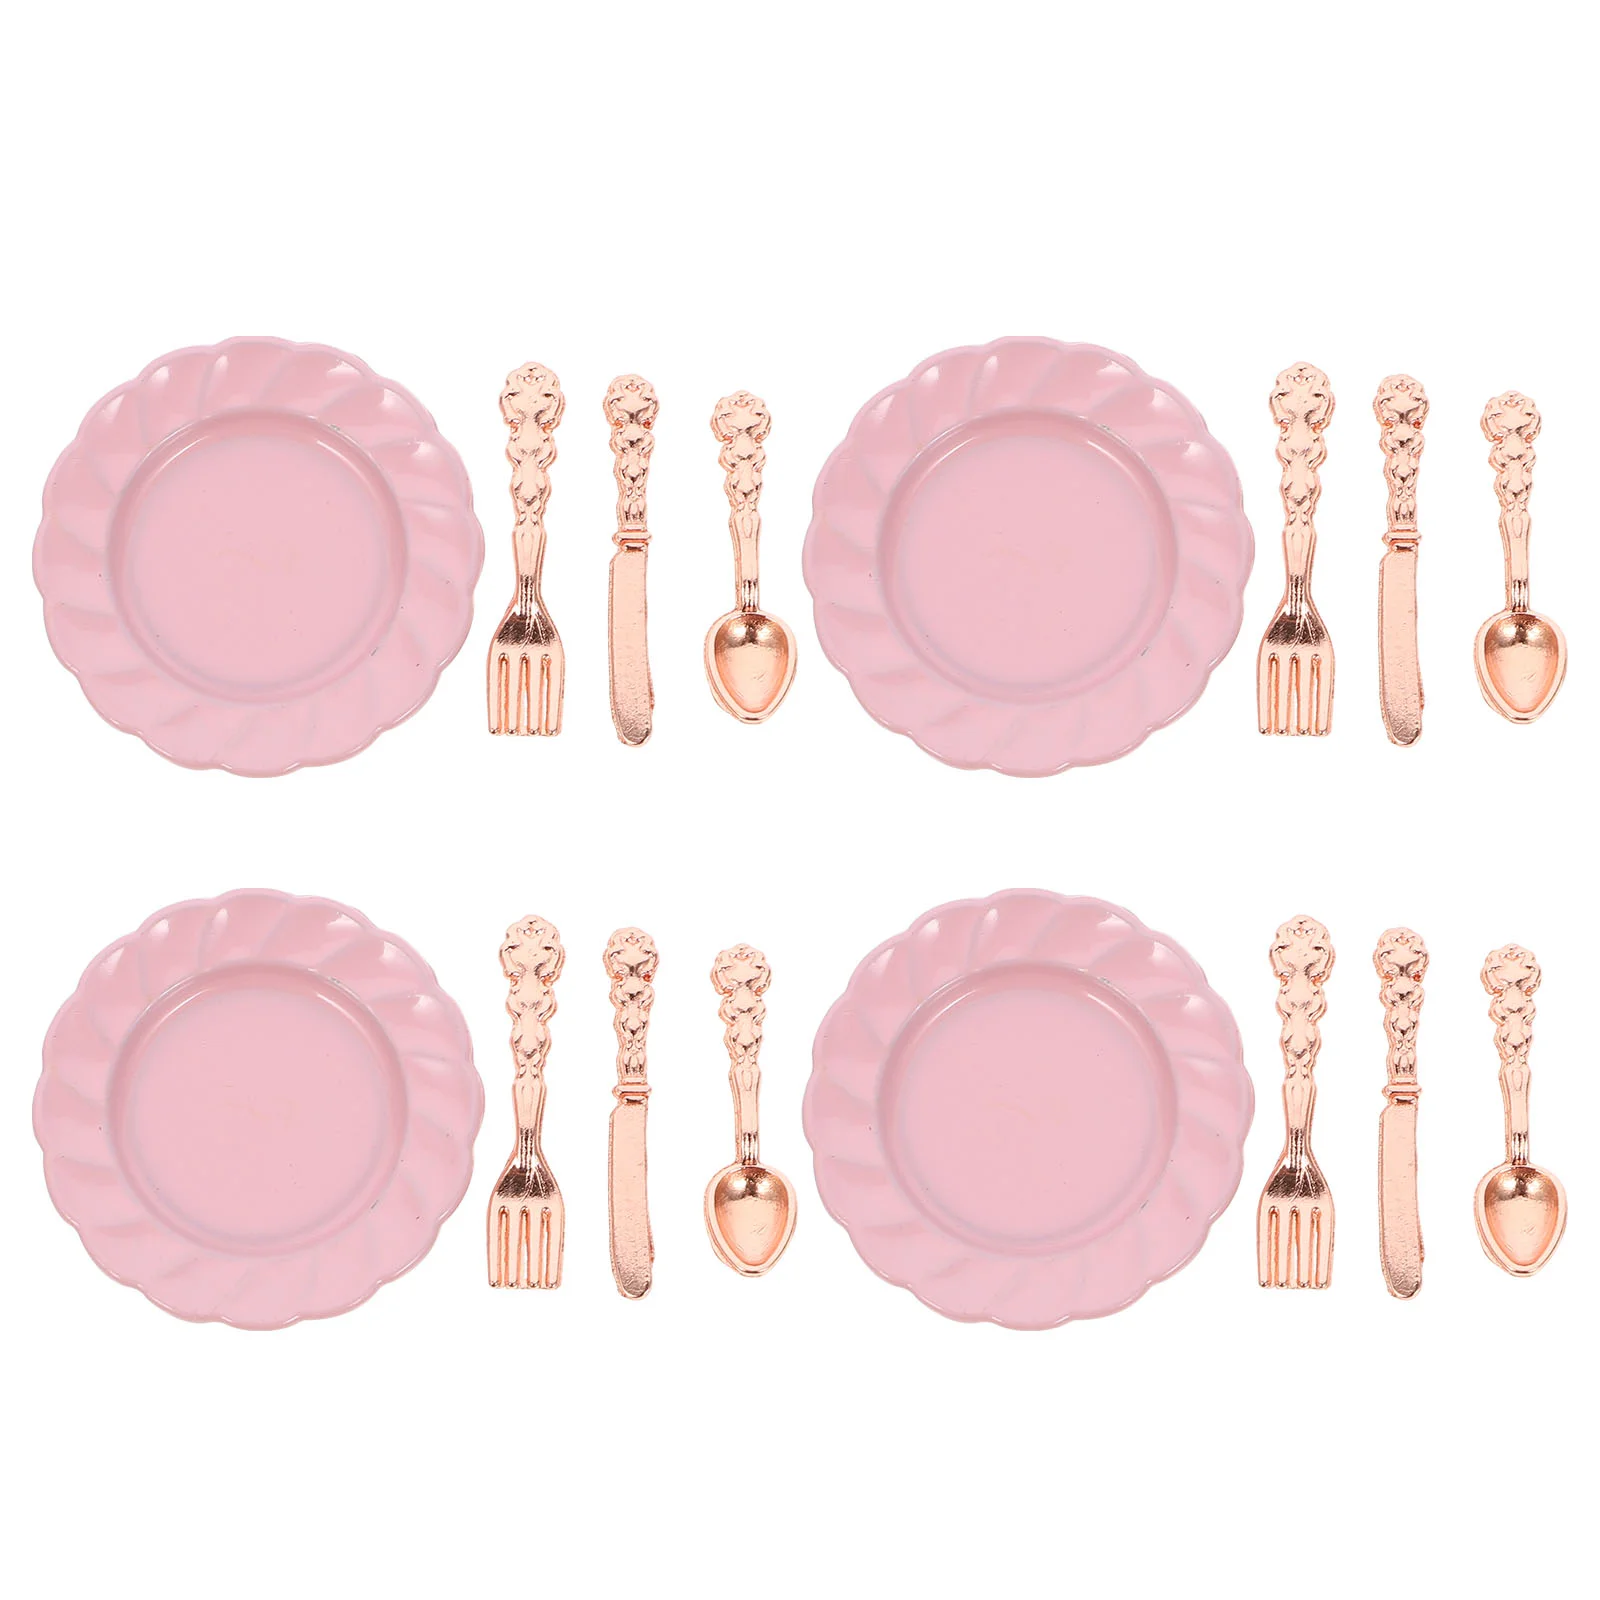 

Mini Dollhouse Plate Set Tableware Spoon Dish Flatware Miniature Kitchen Fork Accessories Play Plates Pretend Model